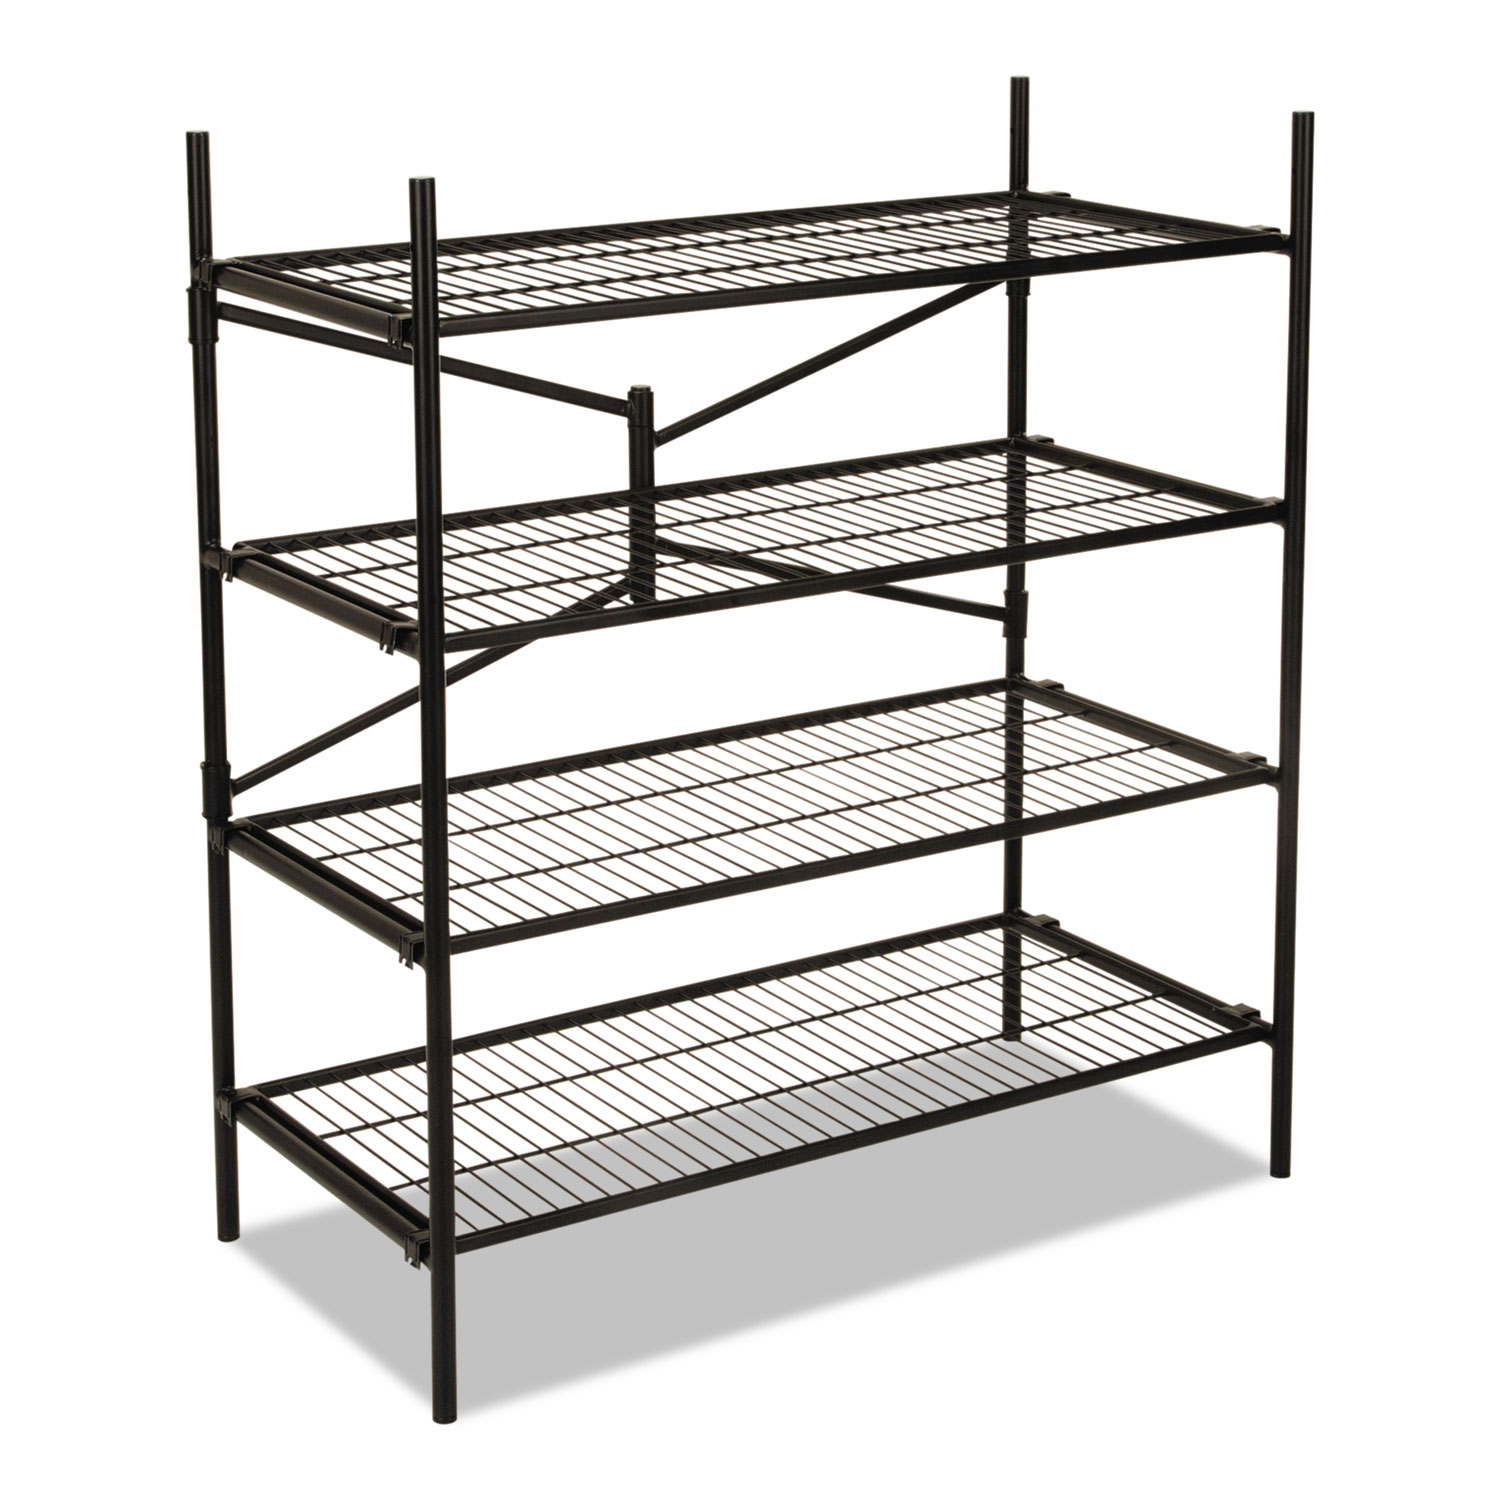 Instant Storage Shelving Unit, 4 Shelves, 42 3/4 x 20 3/4 x 47 3/4, Black